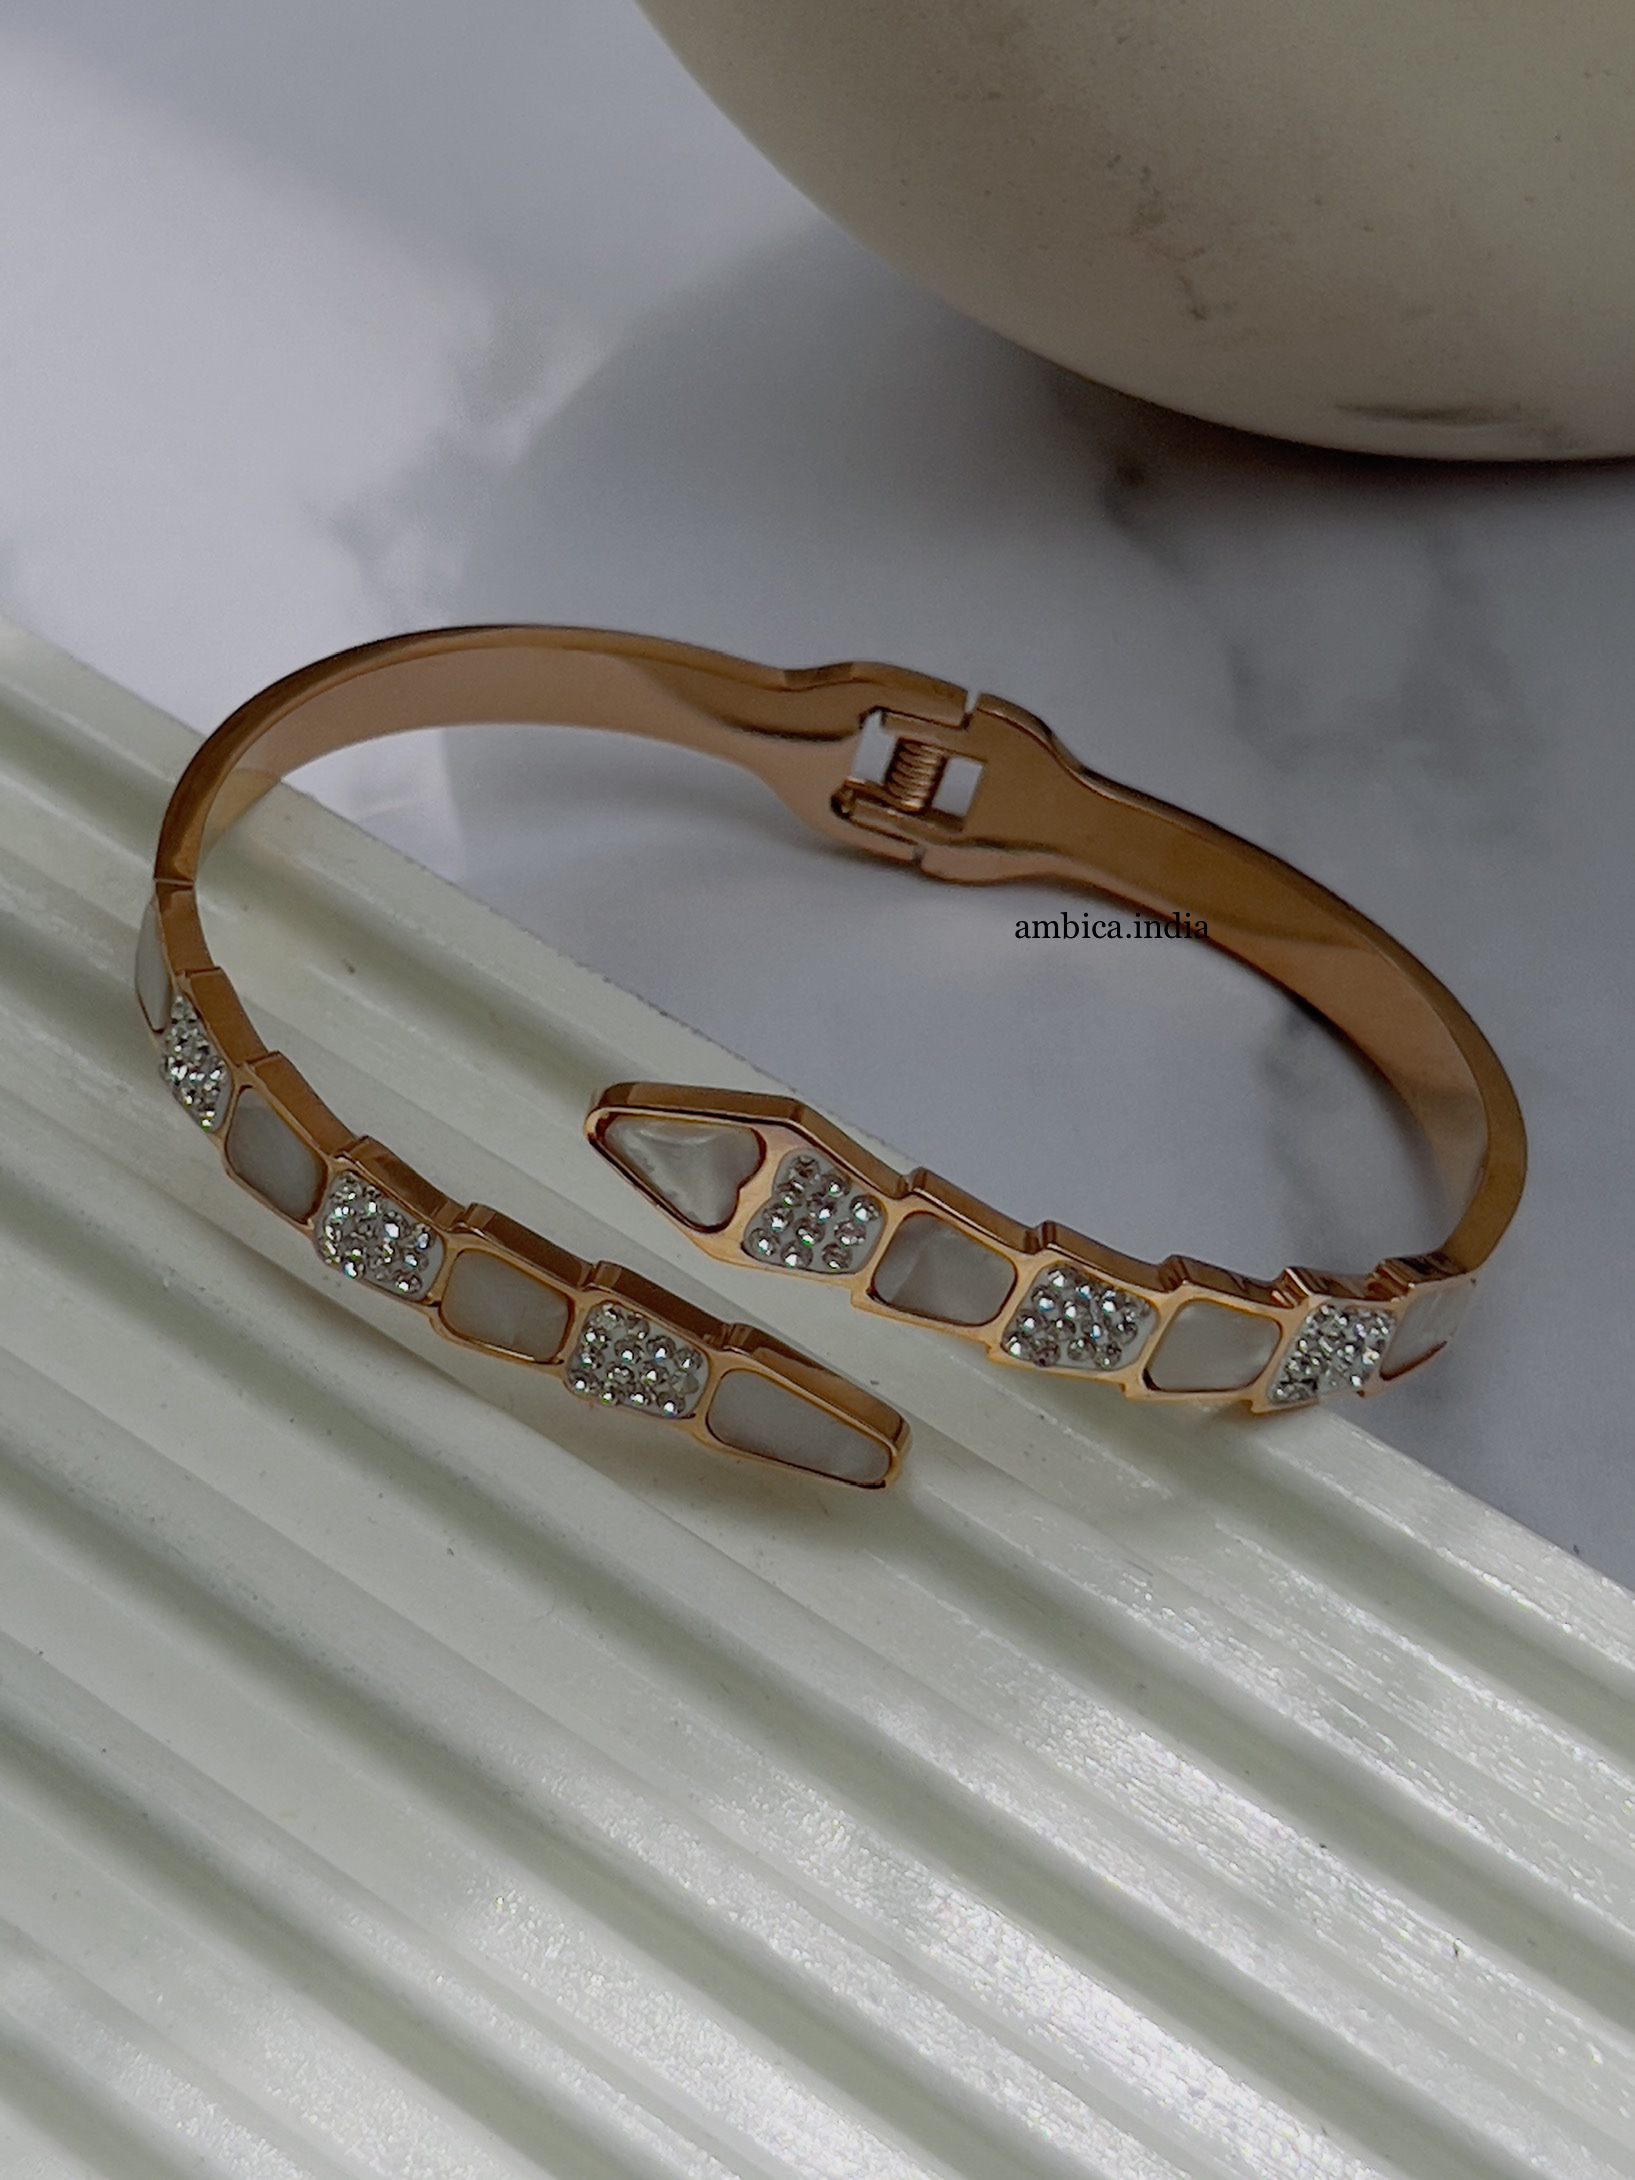 THE GEM-SET AND DIAMOND CROSS BRACELET, CARTIER, 1934-1944 | Lot |  Sotheby's | Cross bracelet, Extraordinary jewelry, Cross charms